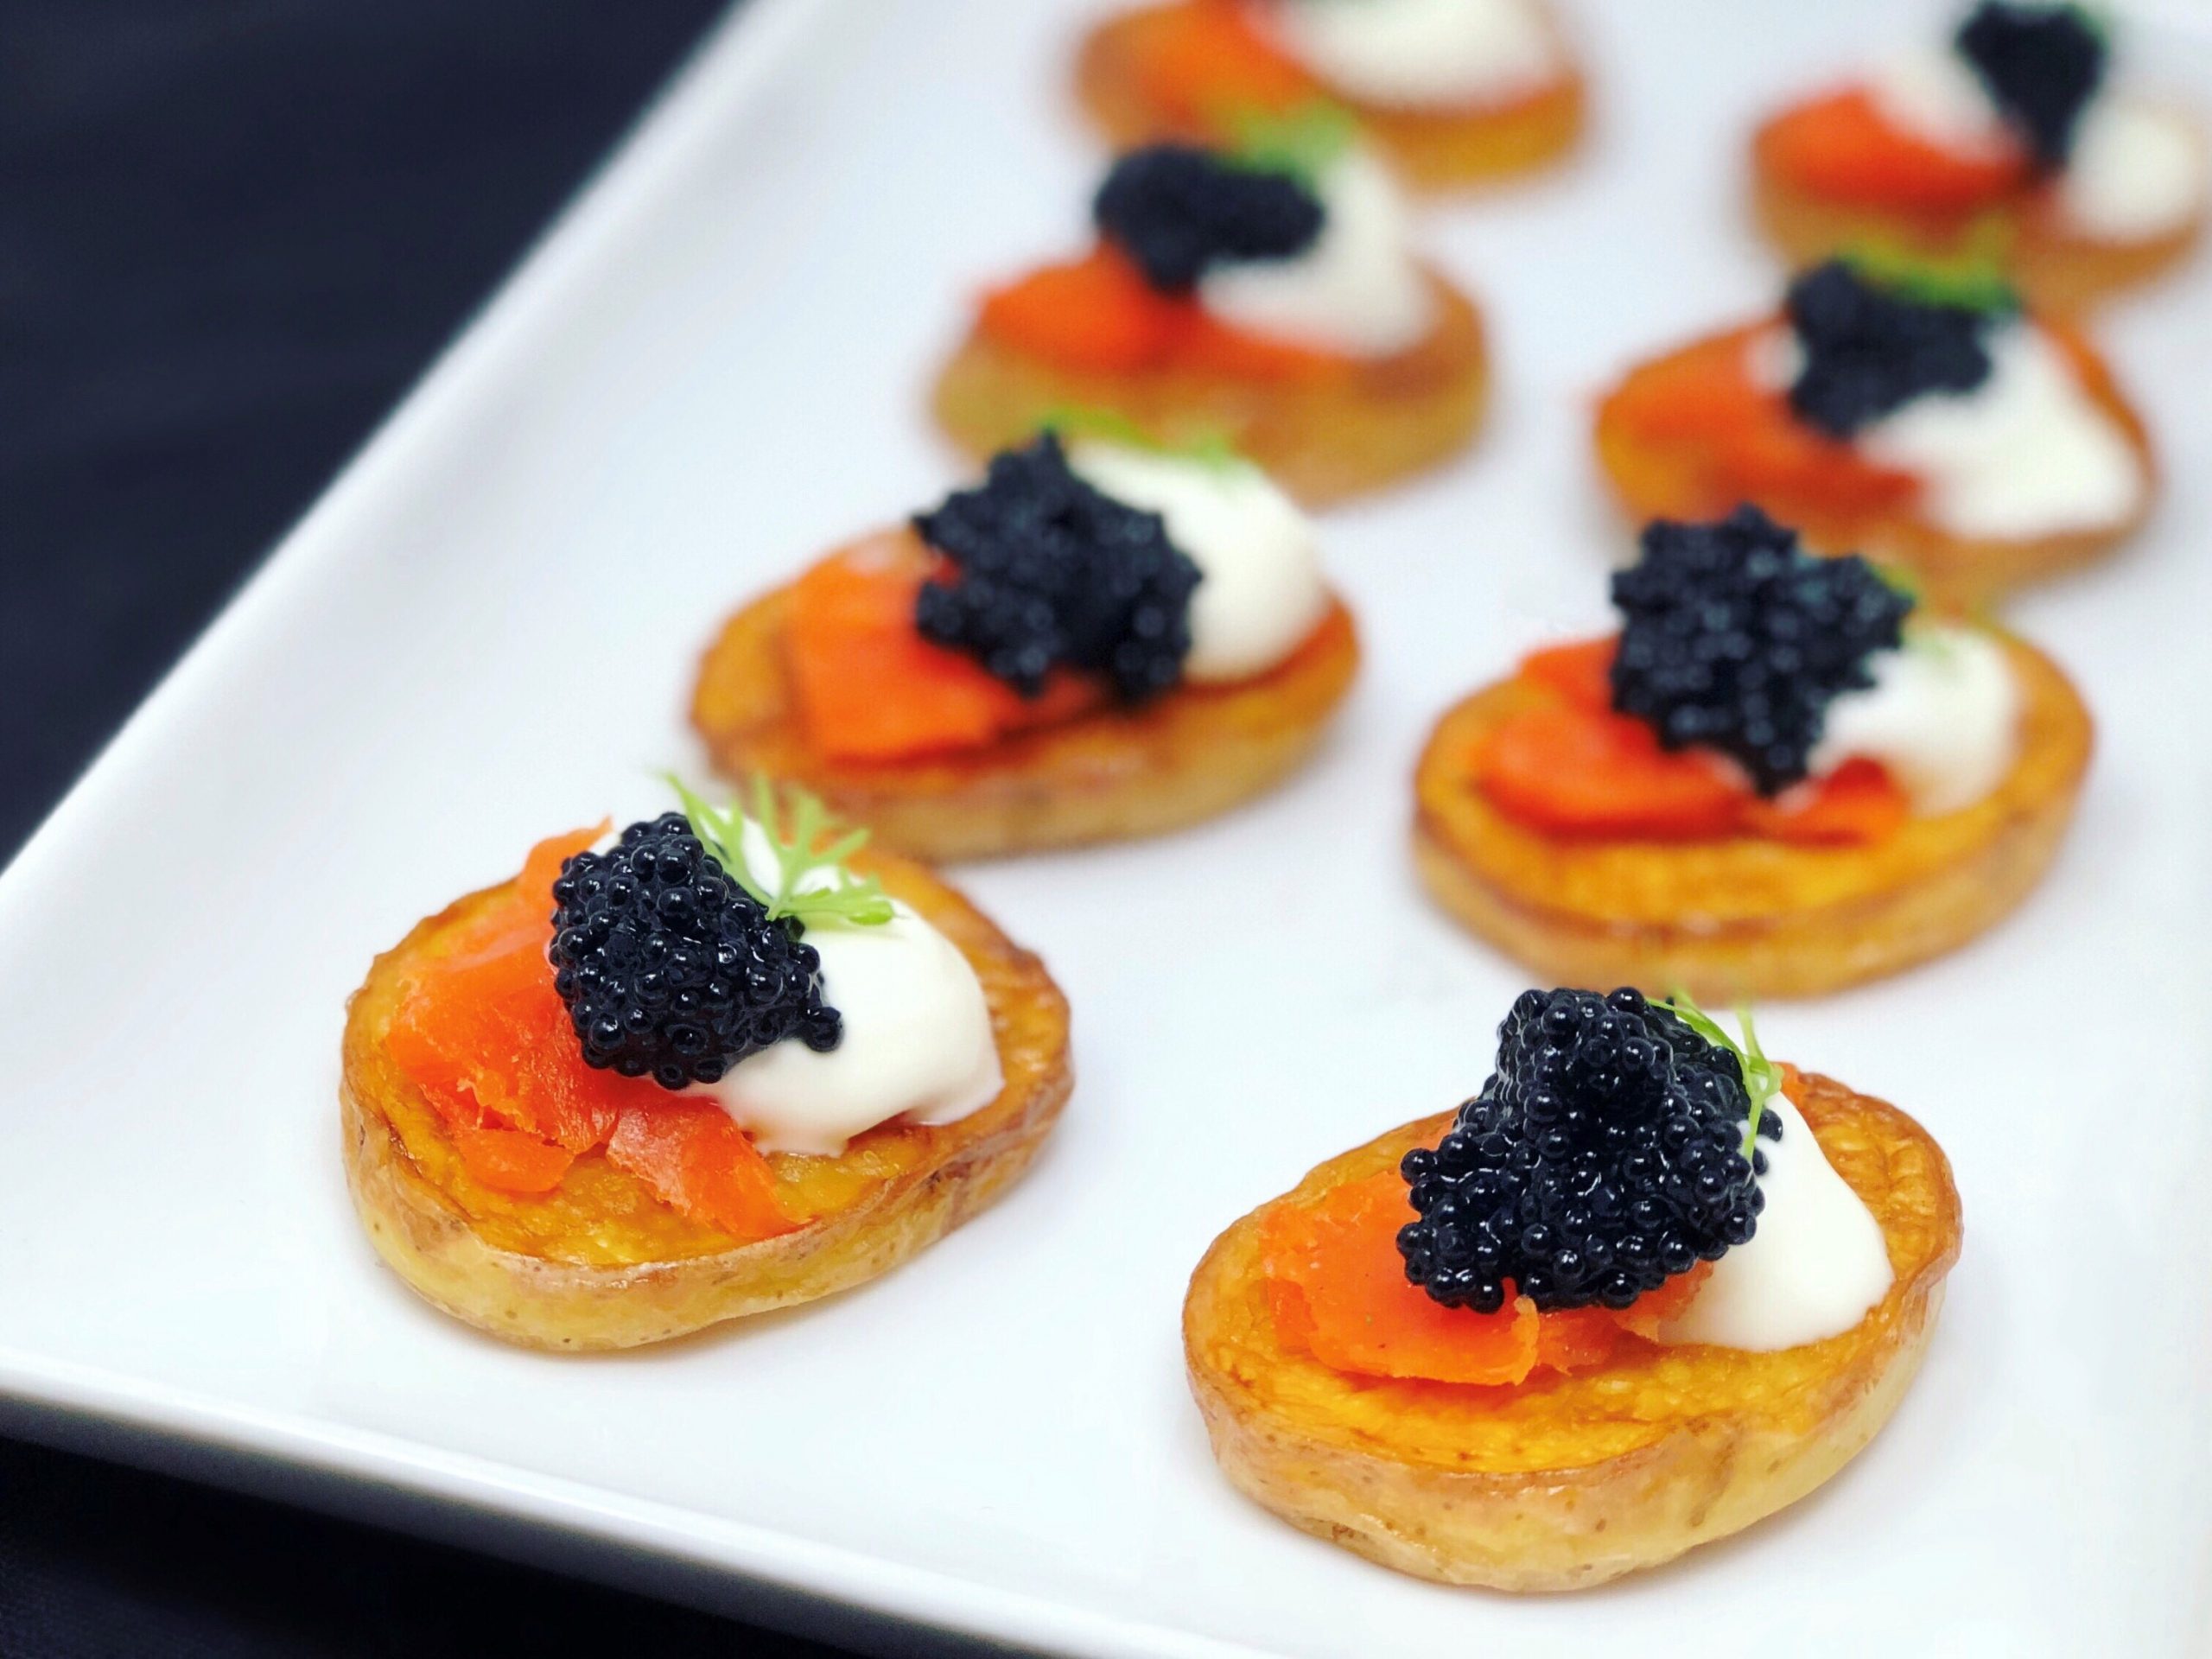 Dish of Crispy Potato Bites with Caviar